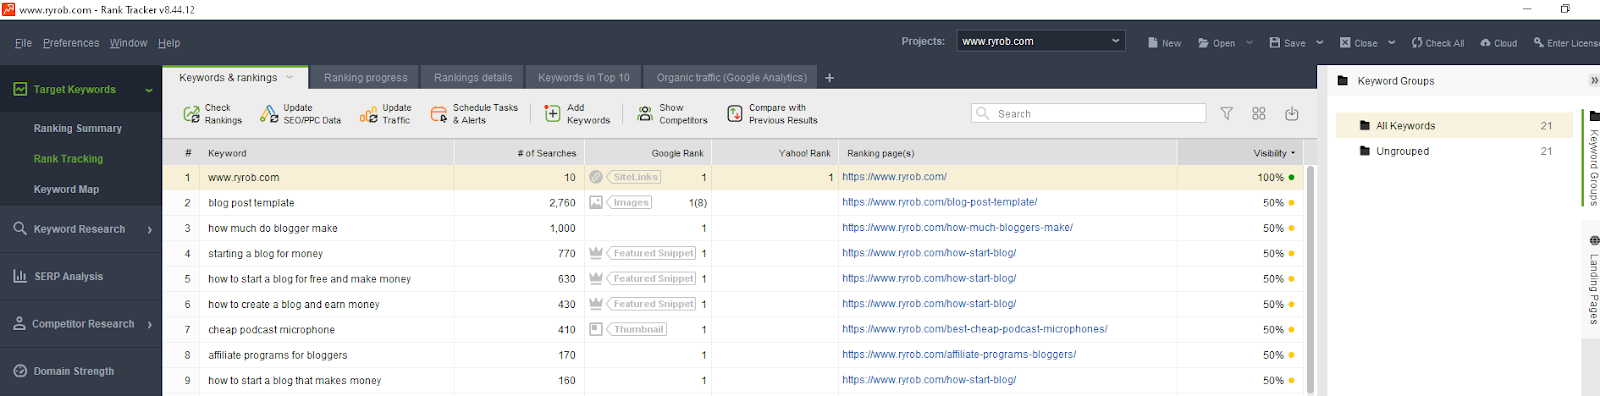 Rank Tracker Keyword Research Screenshot (Examples)